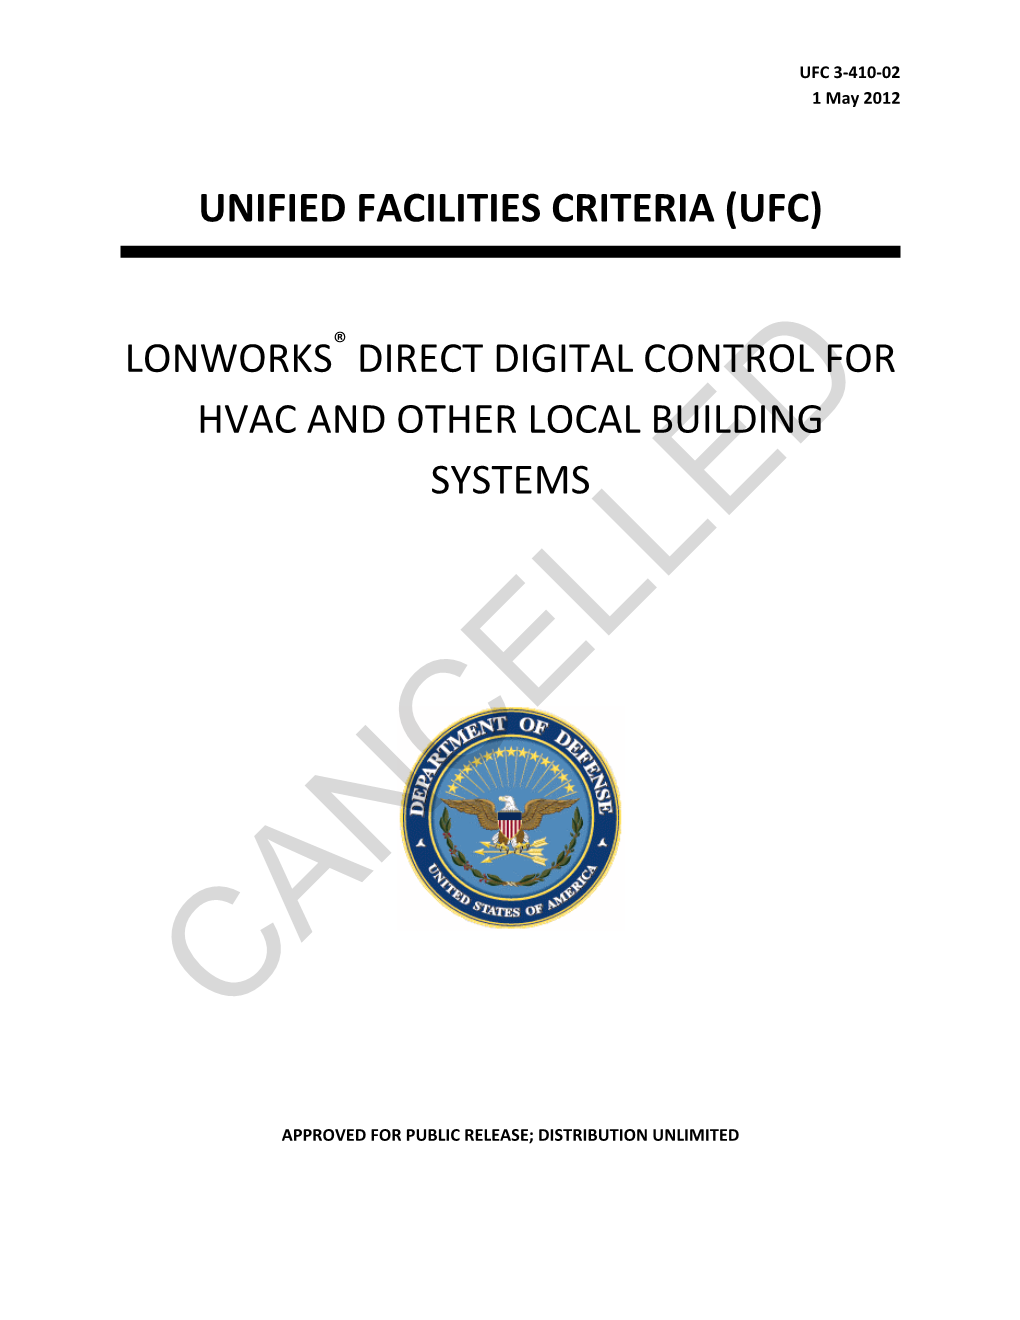 UFC 3-410-02 Lonworks (R) Direct Digital Control for HVAC and Other